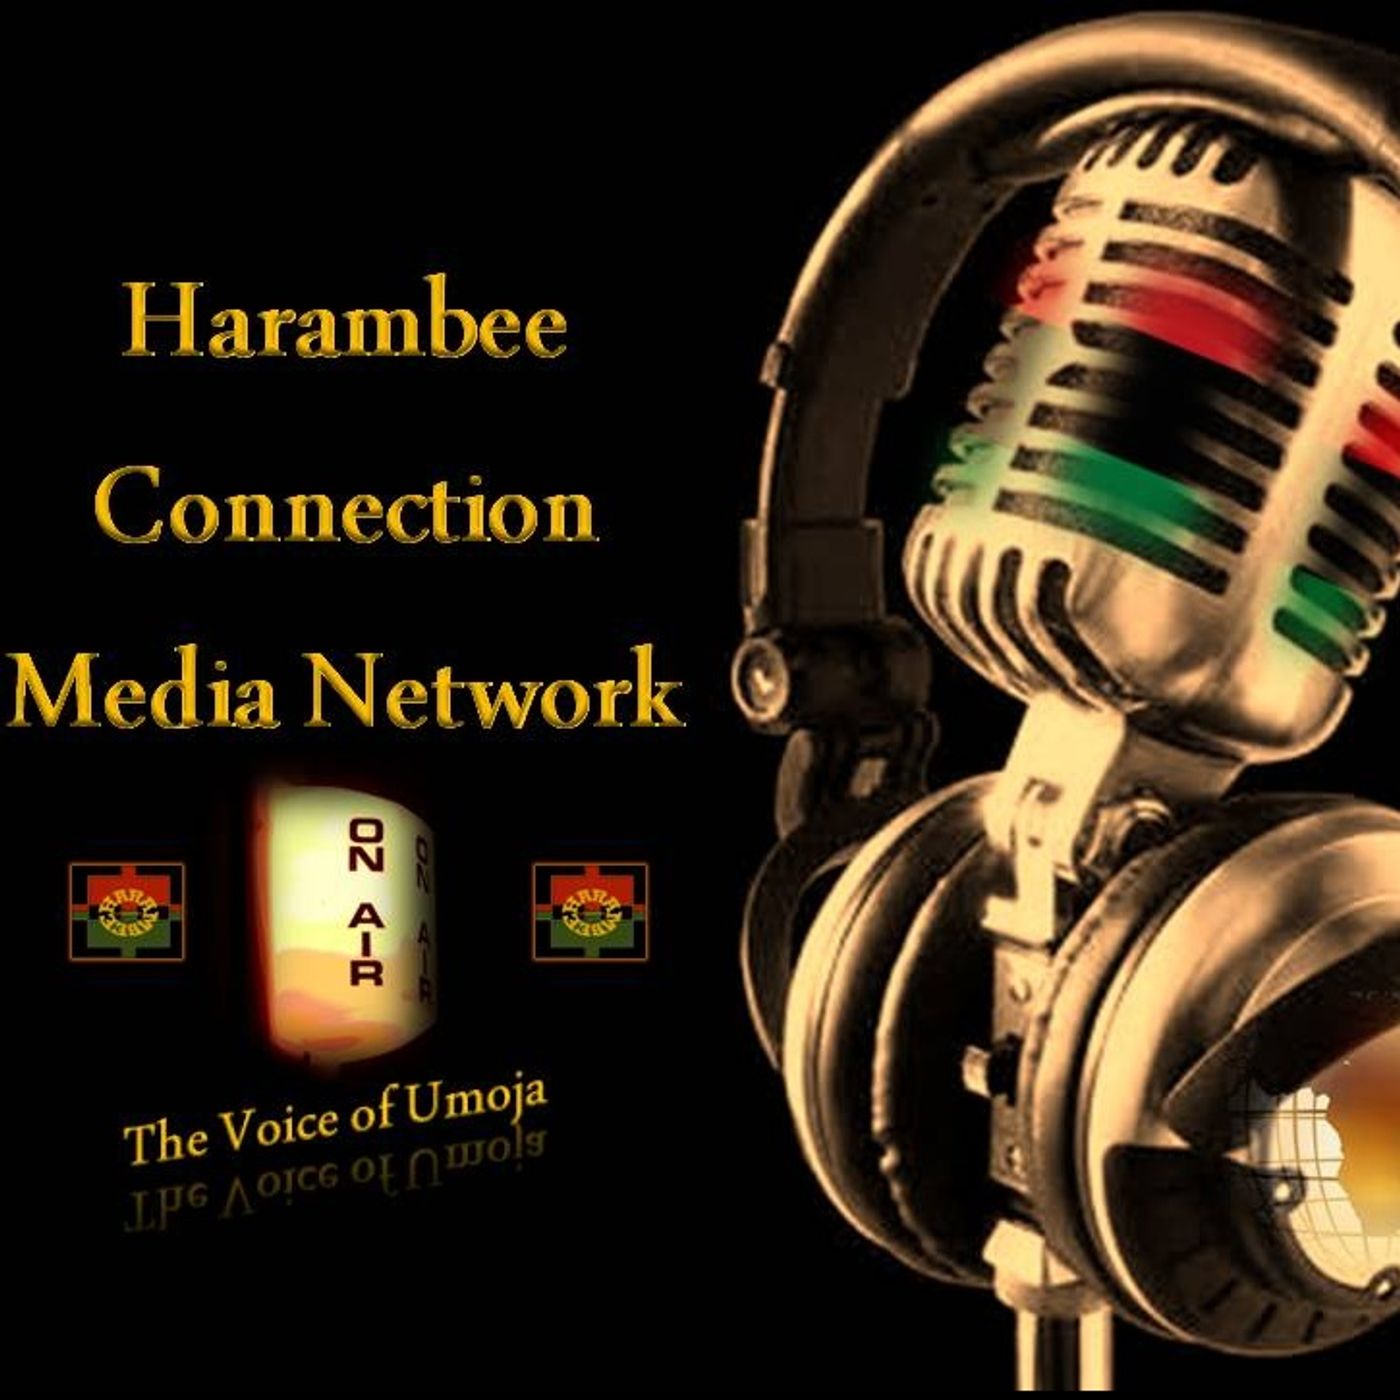 The HC Media Network